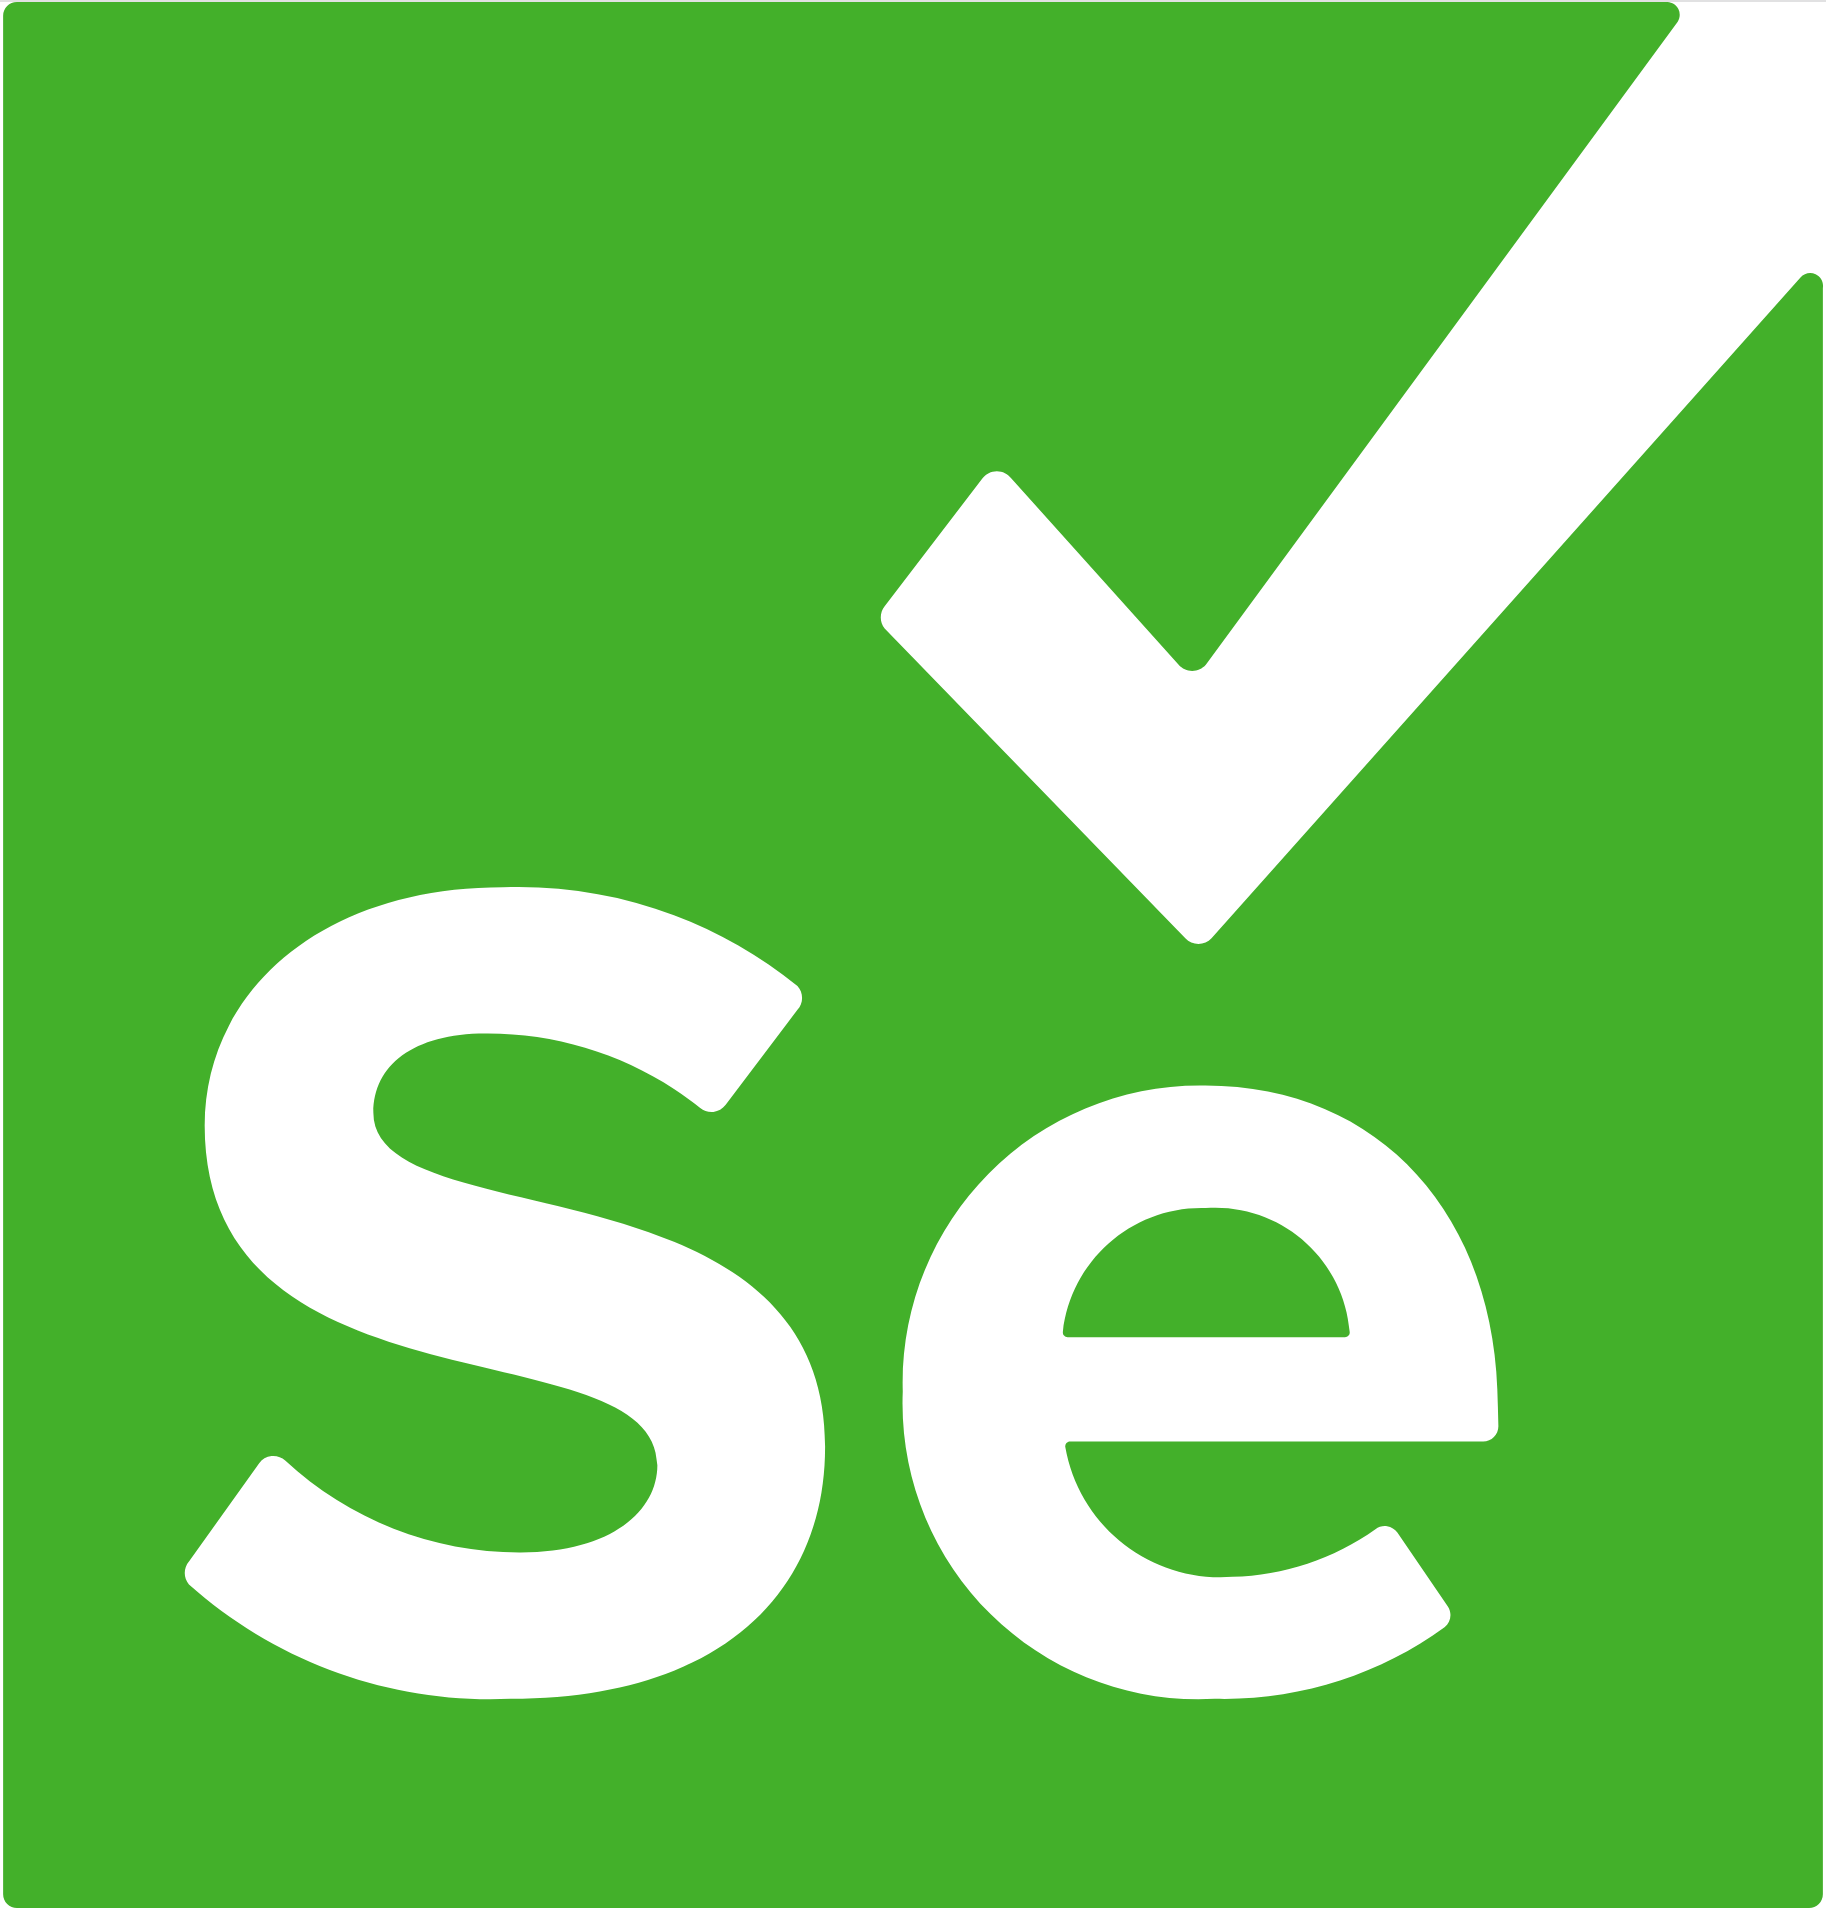 Selenium WebDriver logo